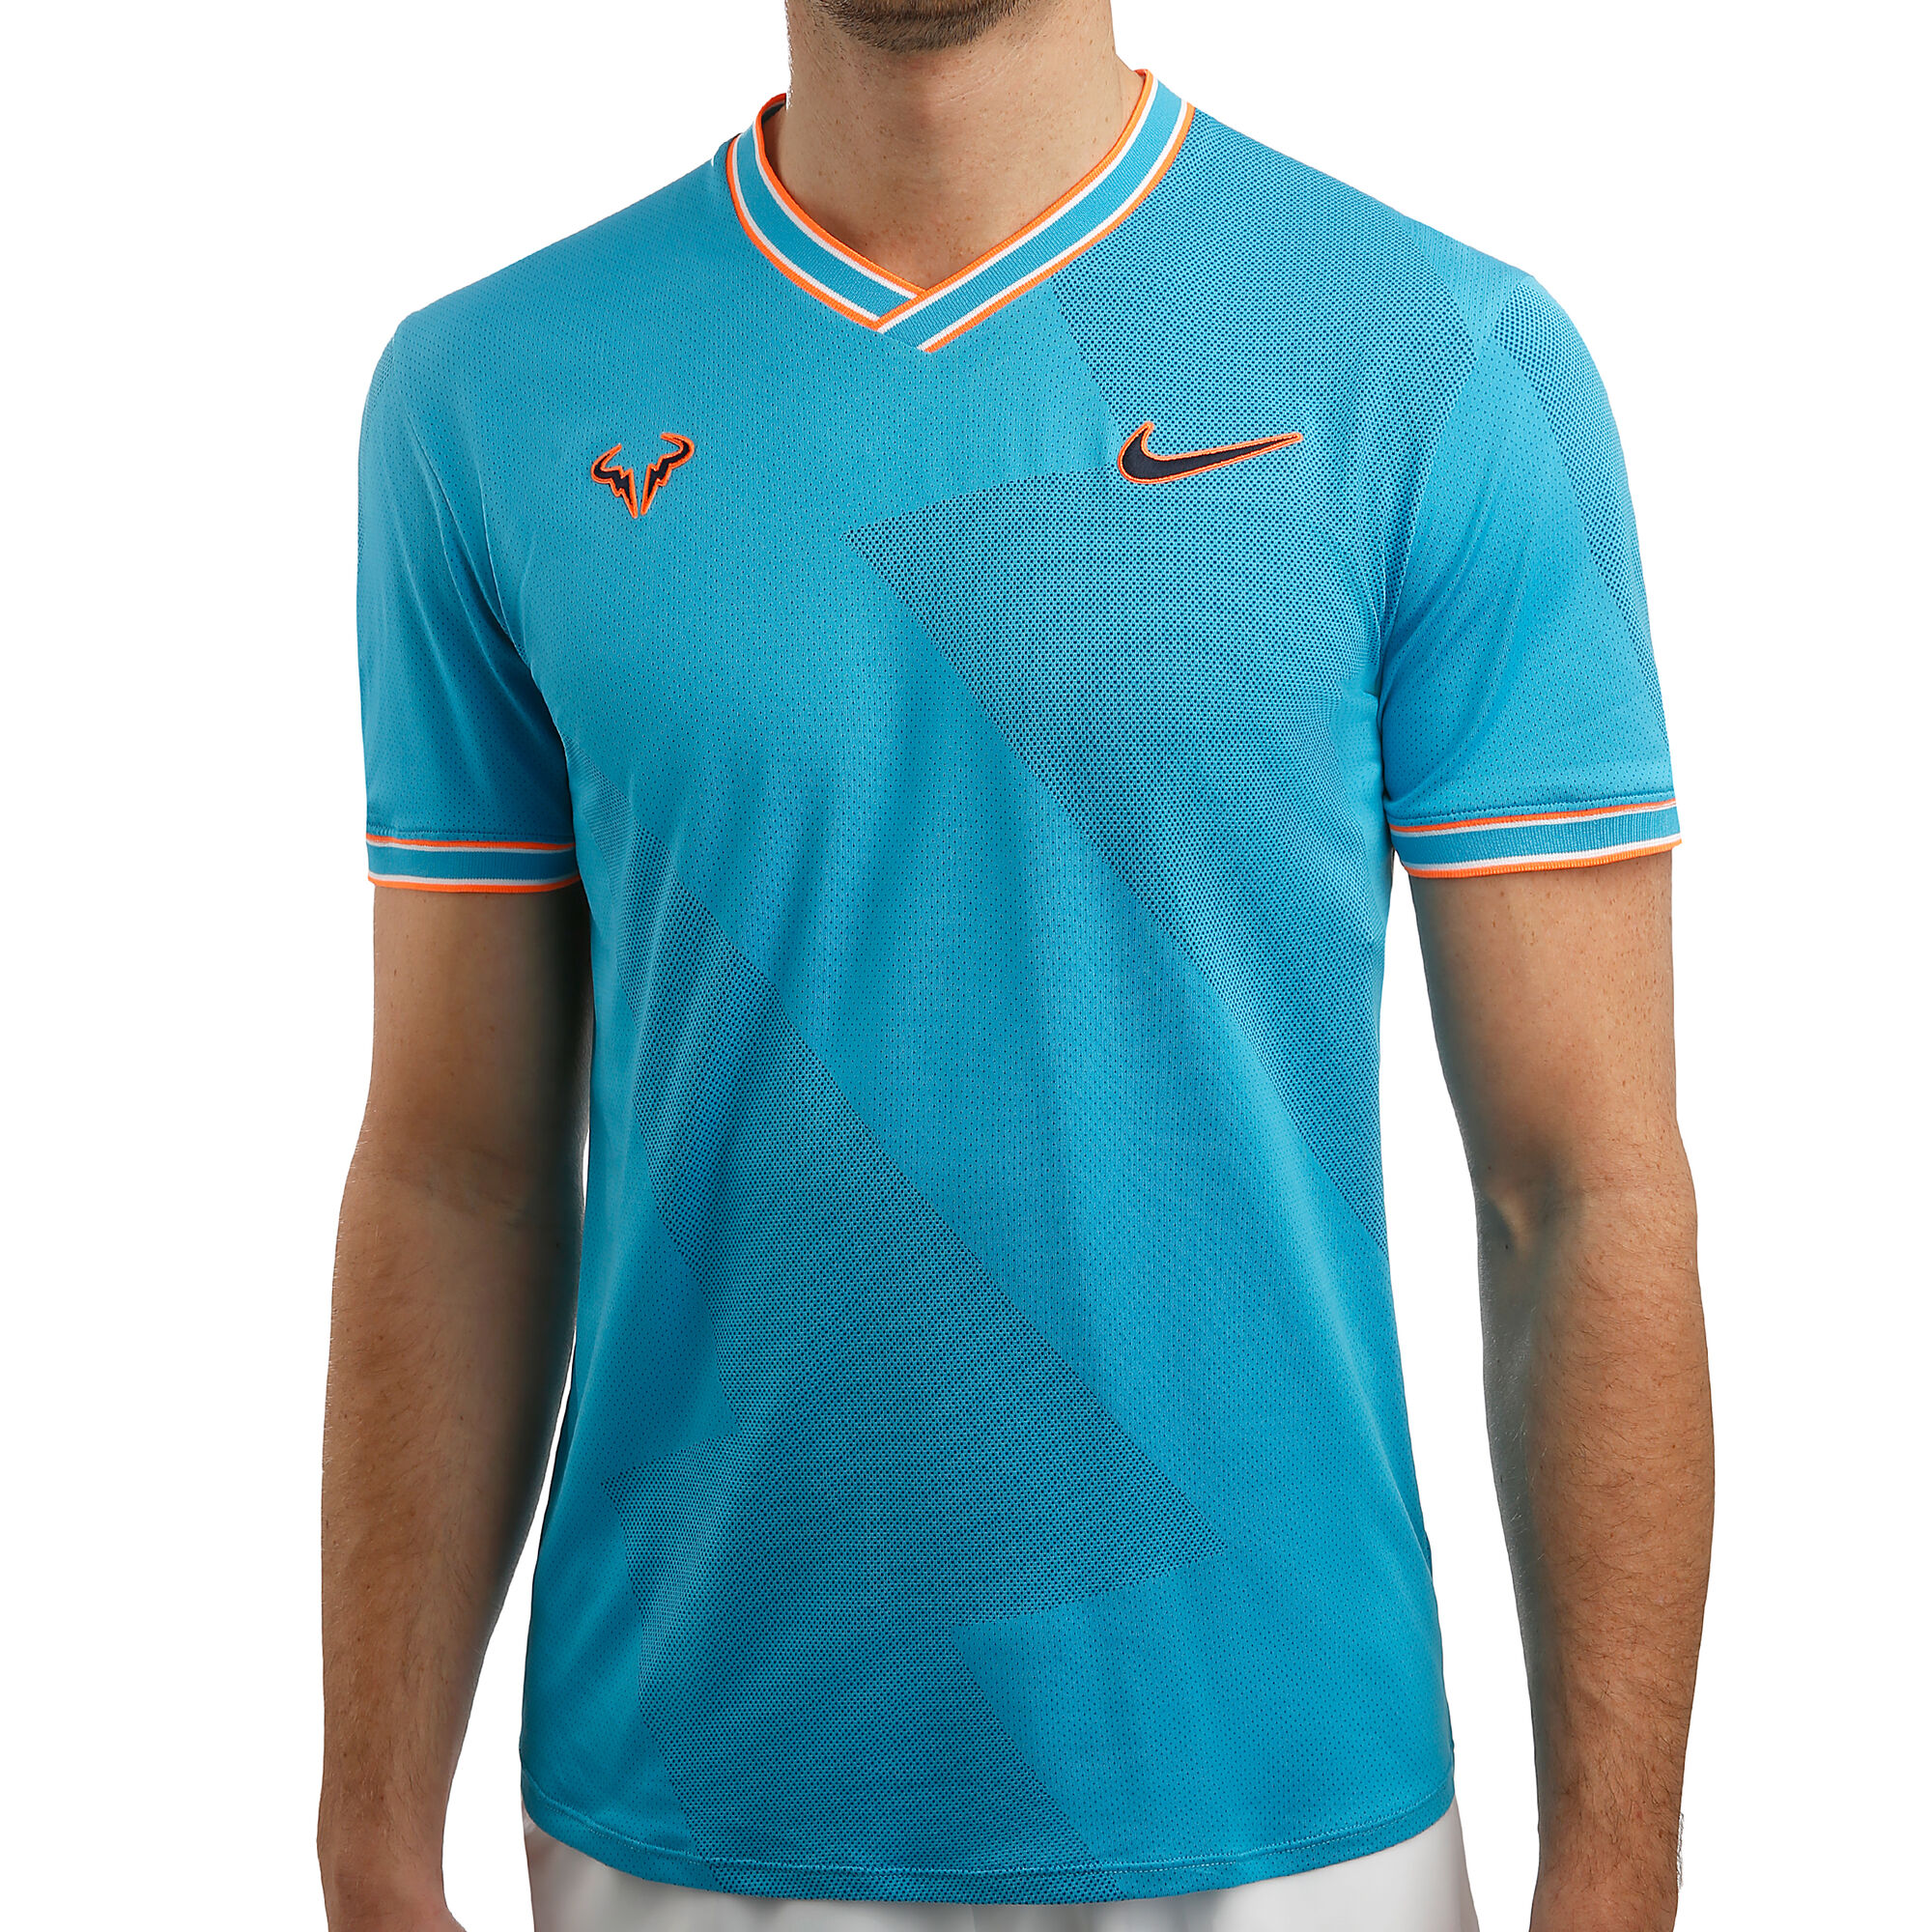 Nike Rafael Nadal Aeroreact Jaquard Camiseta De Manga Corta Azul, Naranja compra online Tennis-Point